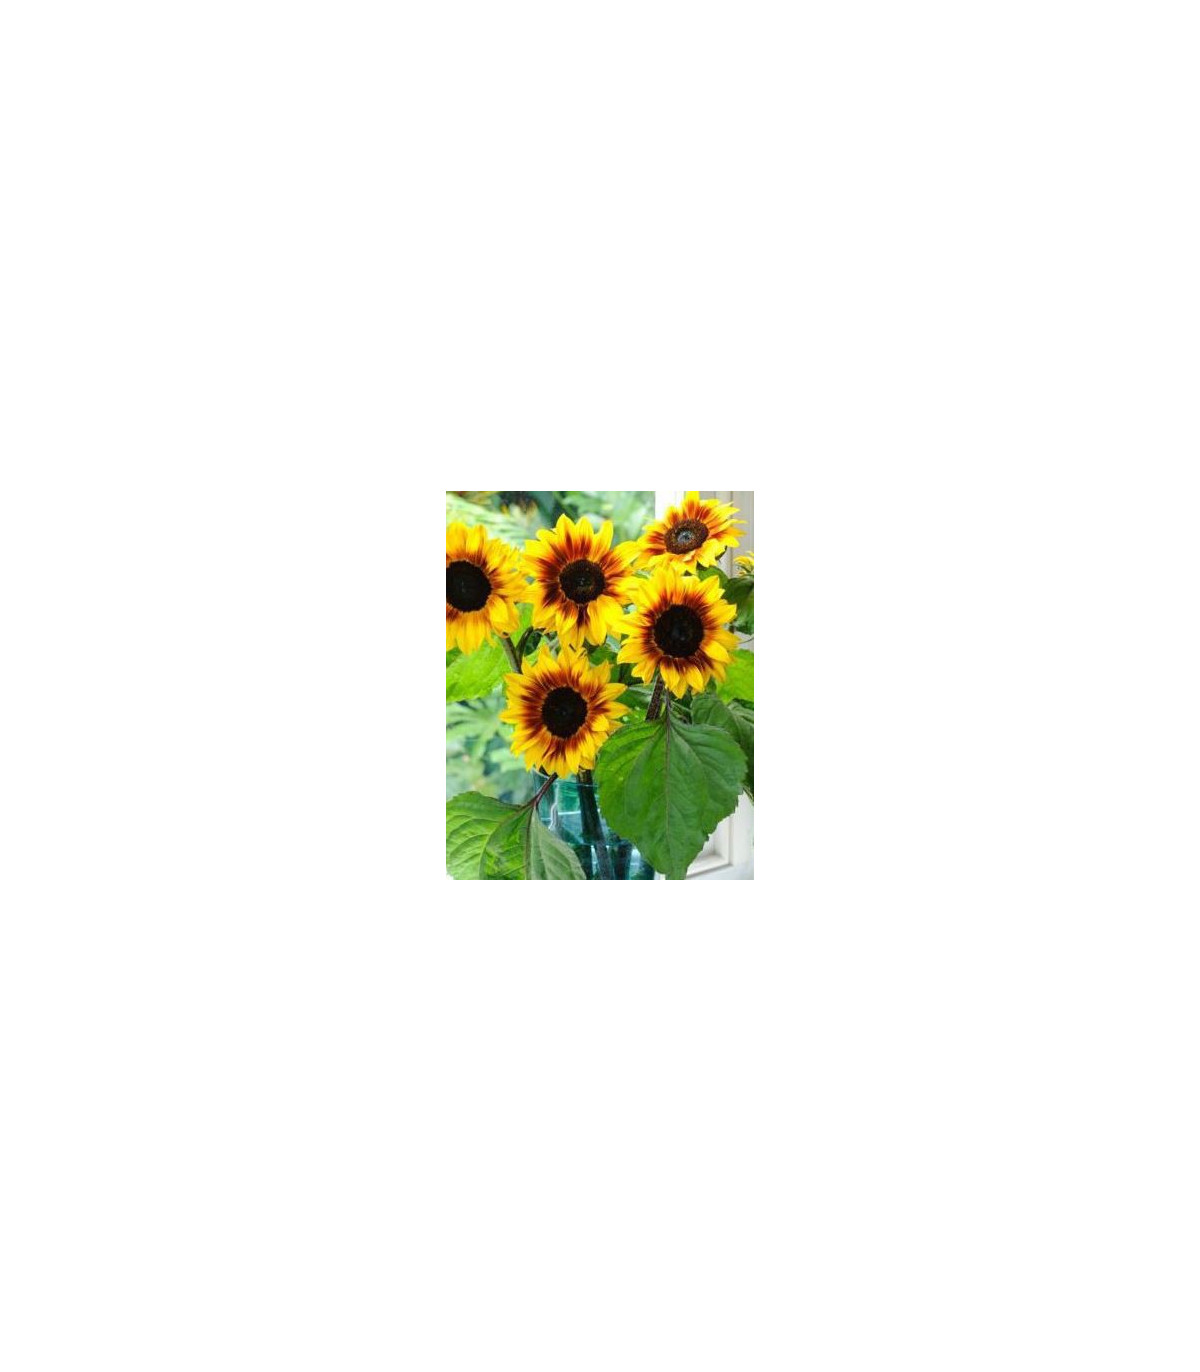 Slunečnice roční Helios - Helianthus annuus - prodej semen - 7 ks